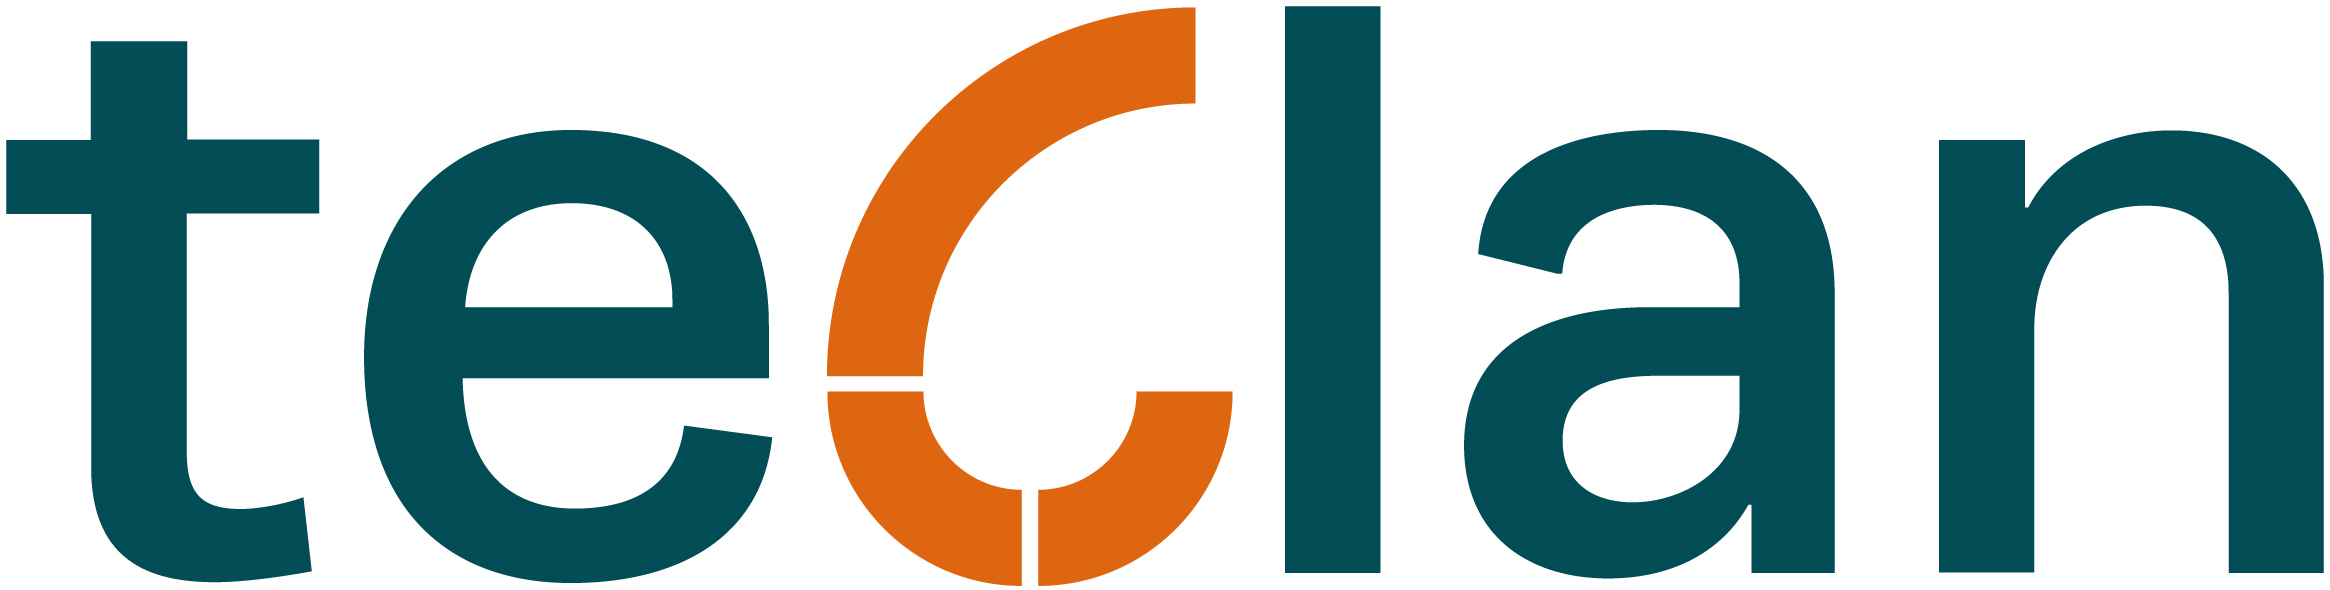 logo for teclan ltd - Digital Marketing